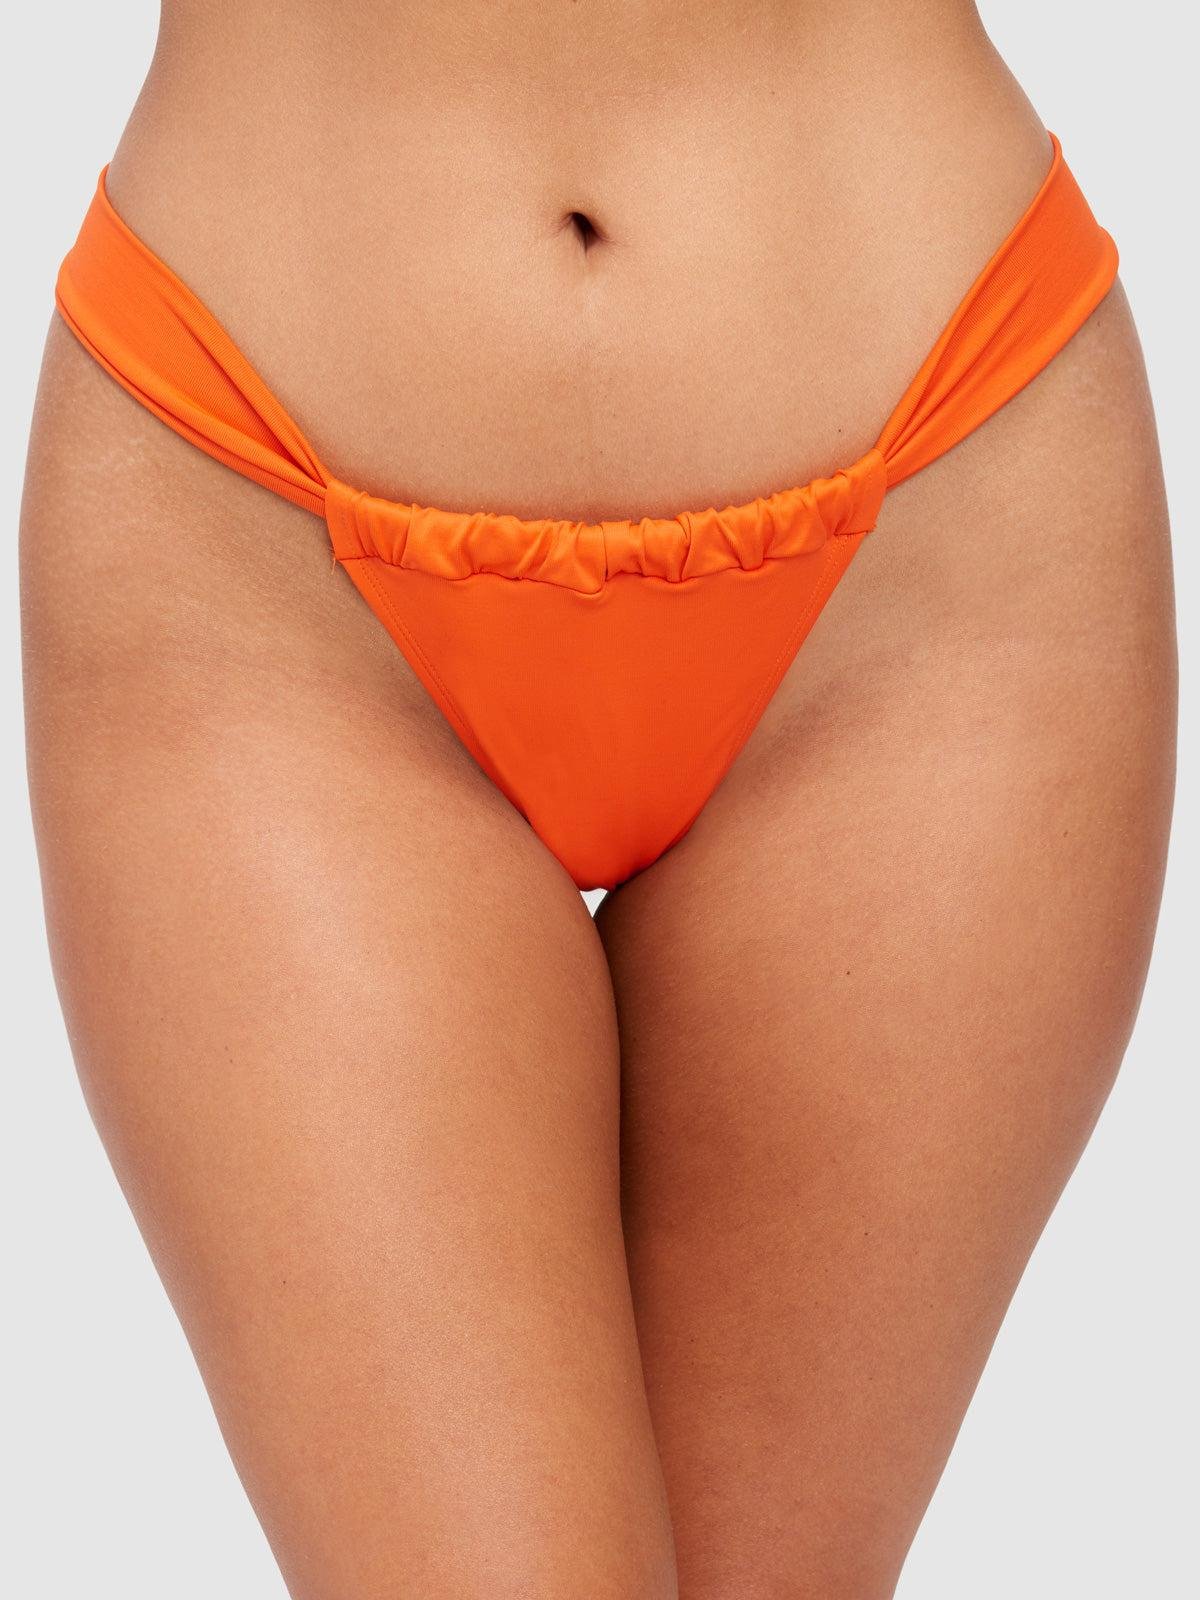 Maddalena Bikini Bottom in Red Orange by FREDERICK'S OF HOLLYWOOD